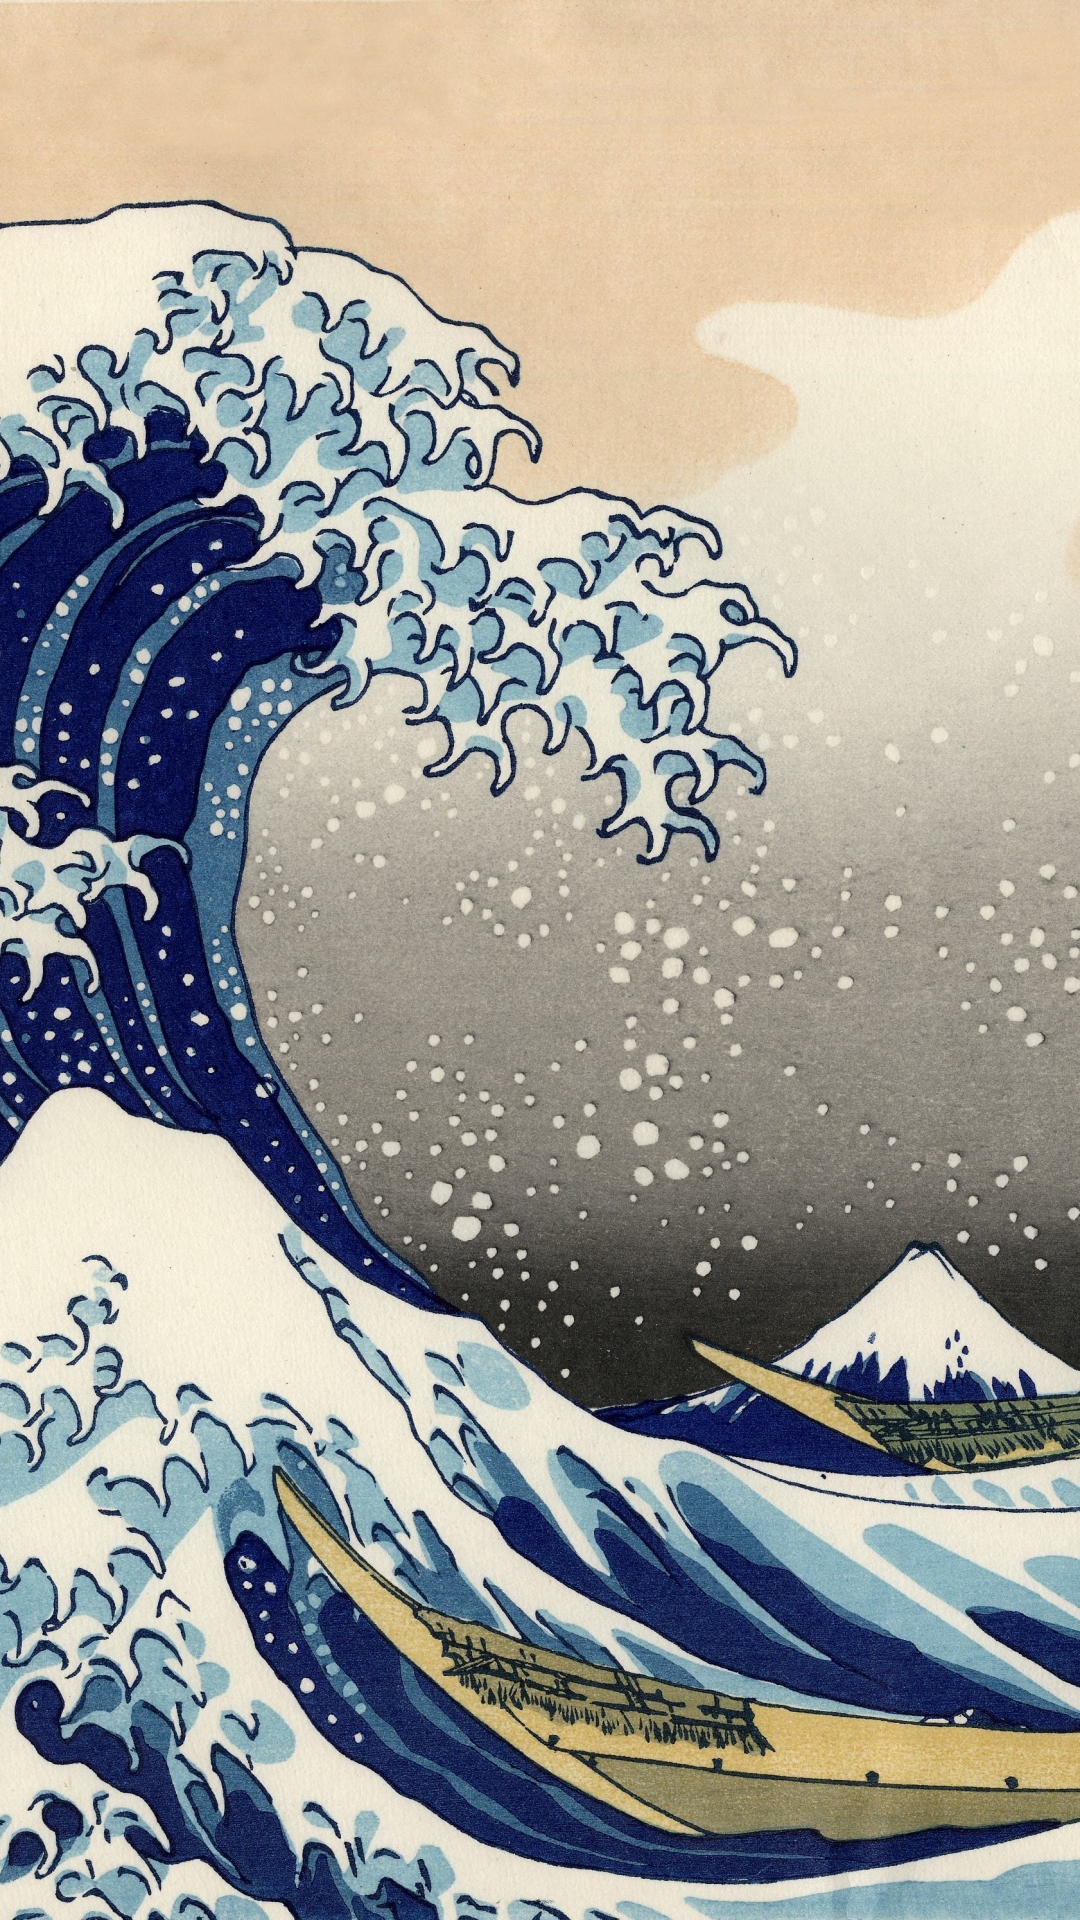 IPhone 5 - Artistic / The Great Wave Off Kanagawa - Wallpaper ID 582819